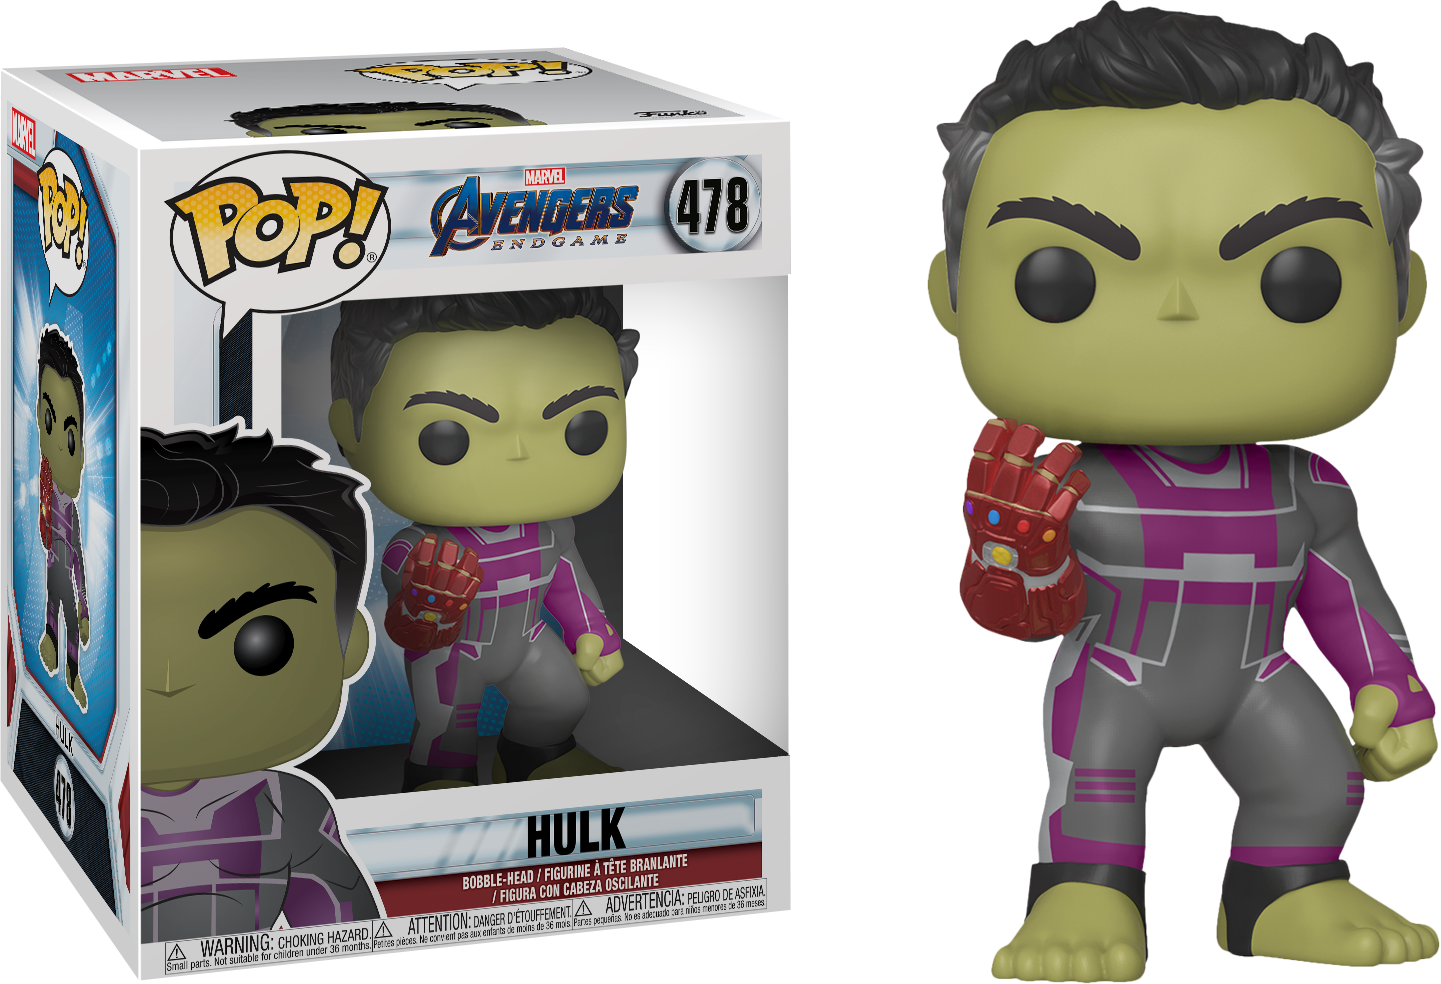 Funko Pop! Avengers 4: Endgame - Hulk with Nano Gauntlet Super Sized 6" #478